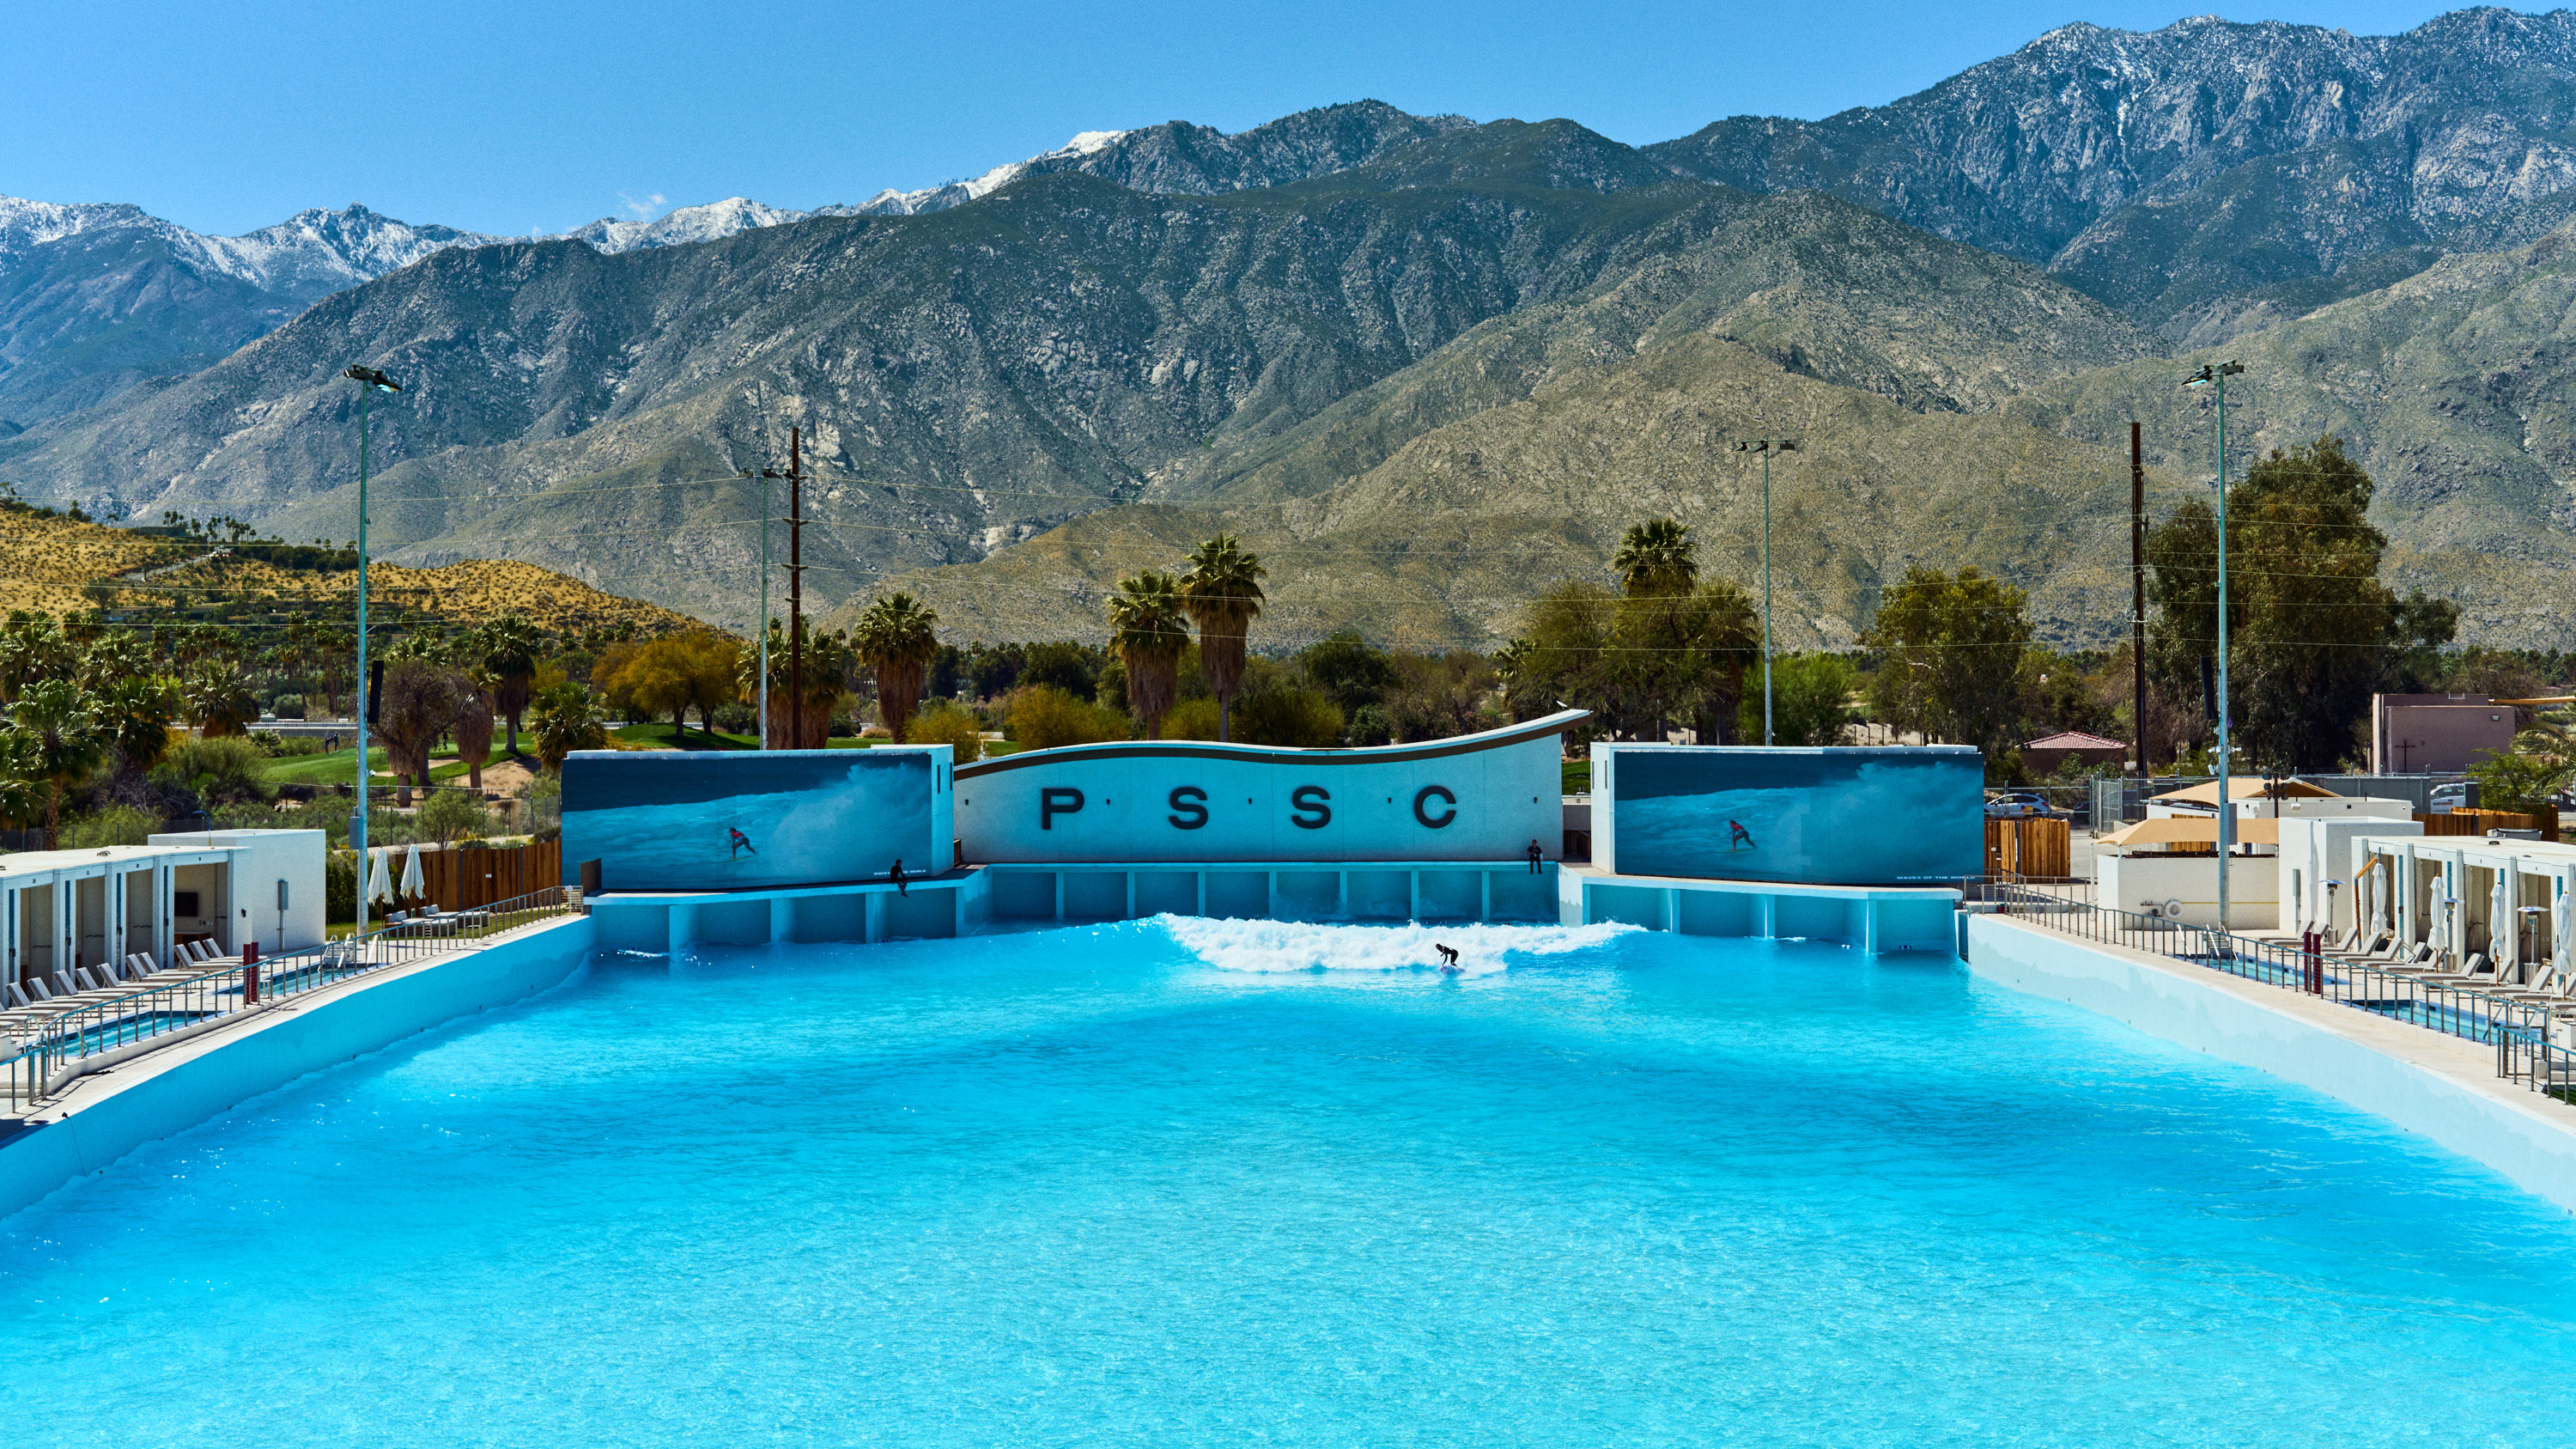 Palm Springs Surf Club vista gran angular de la piscina de olas